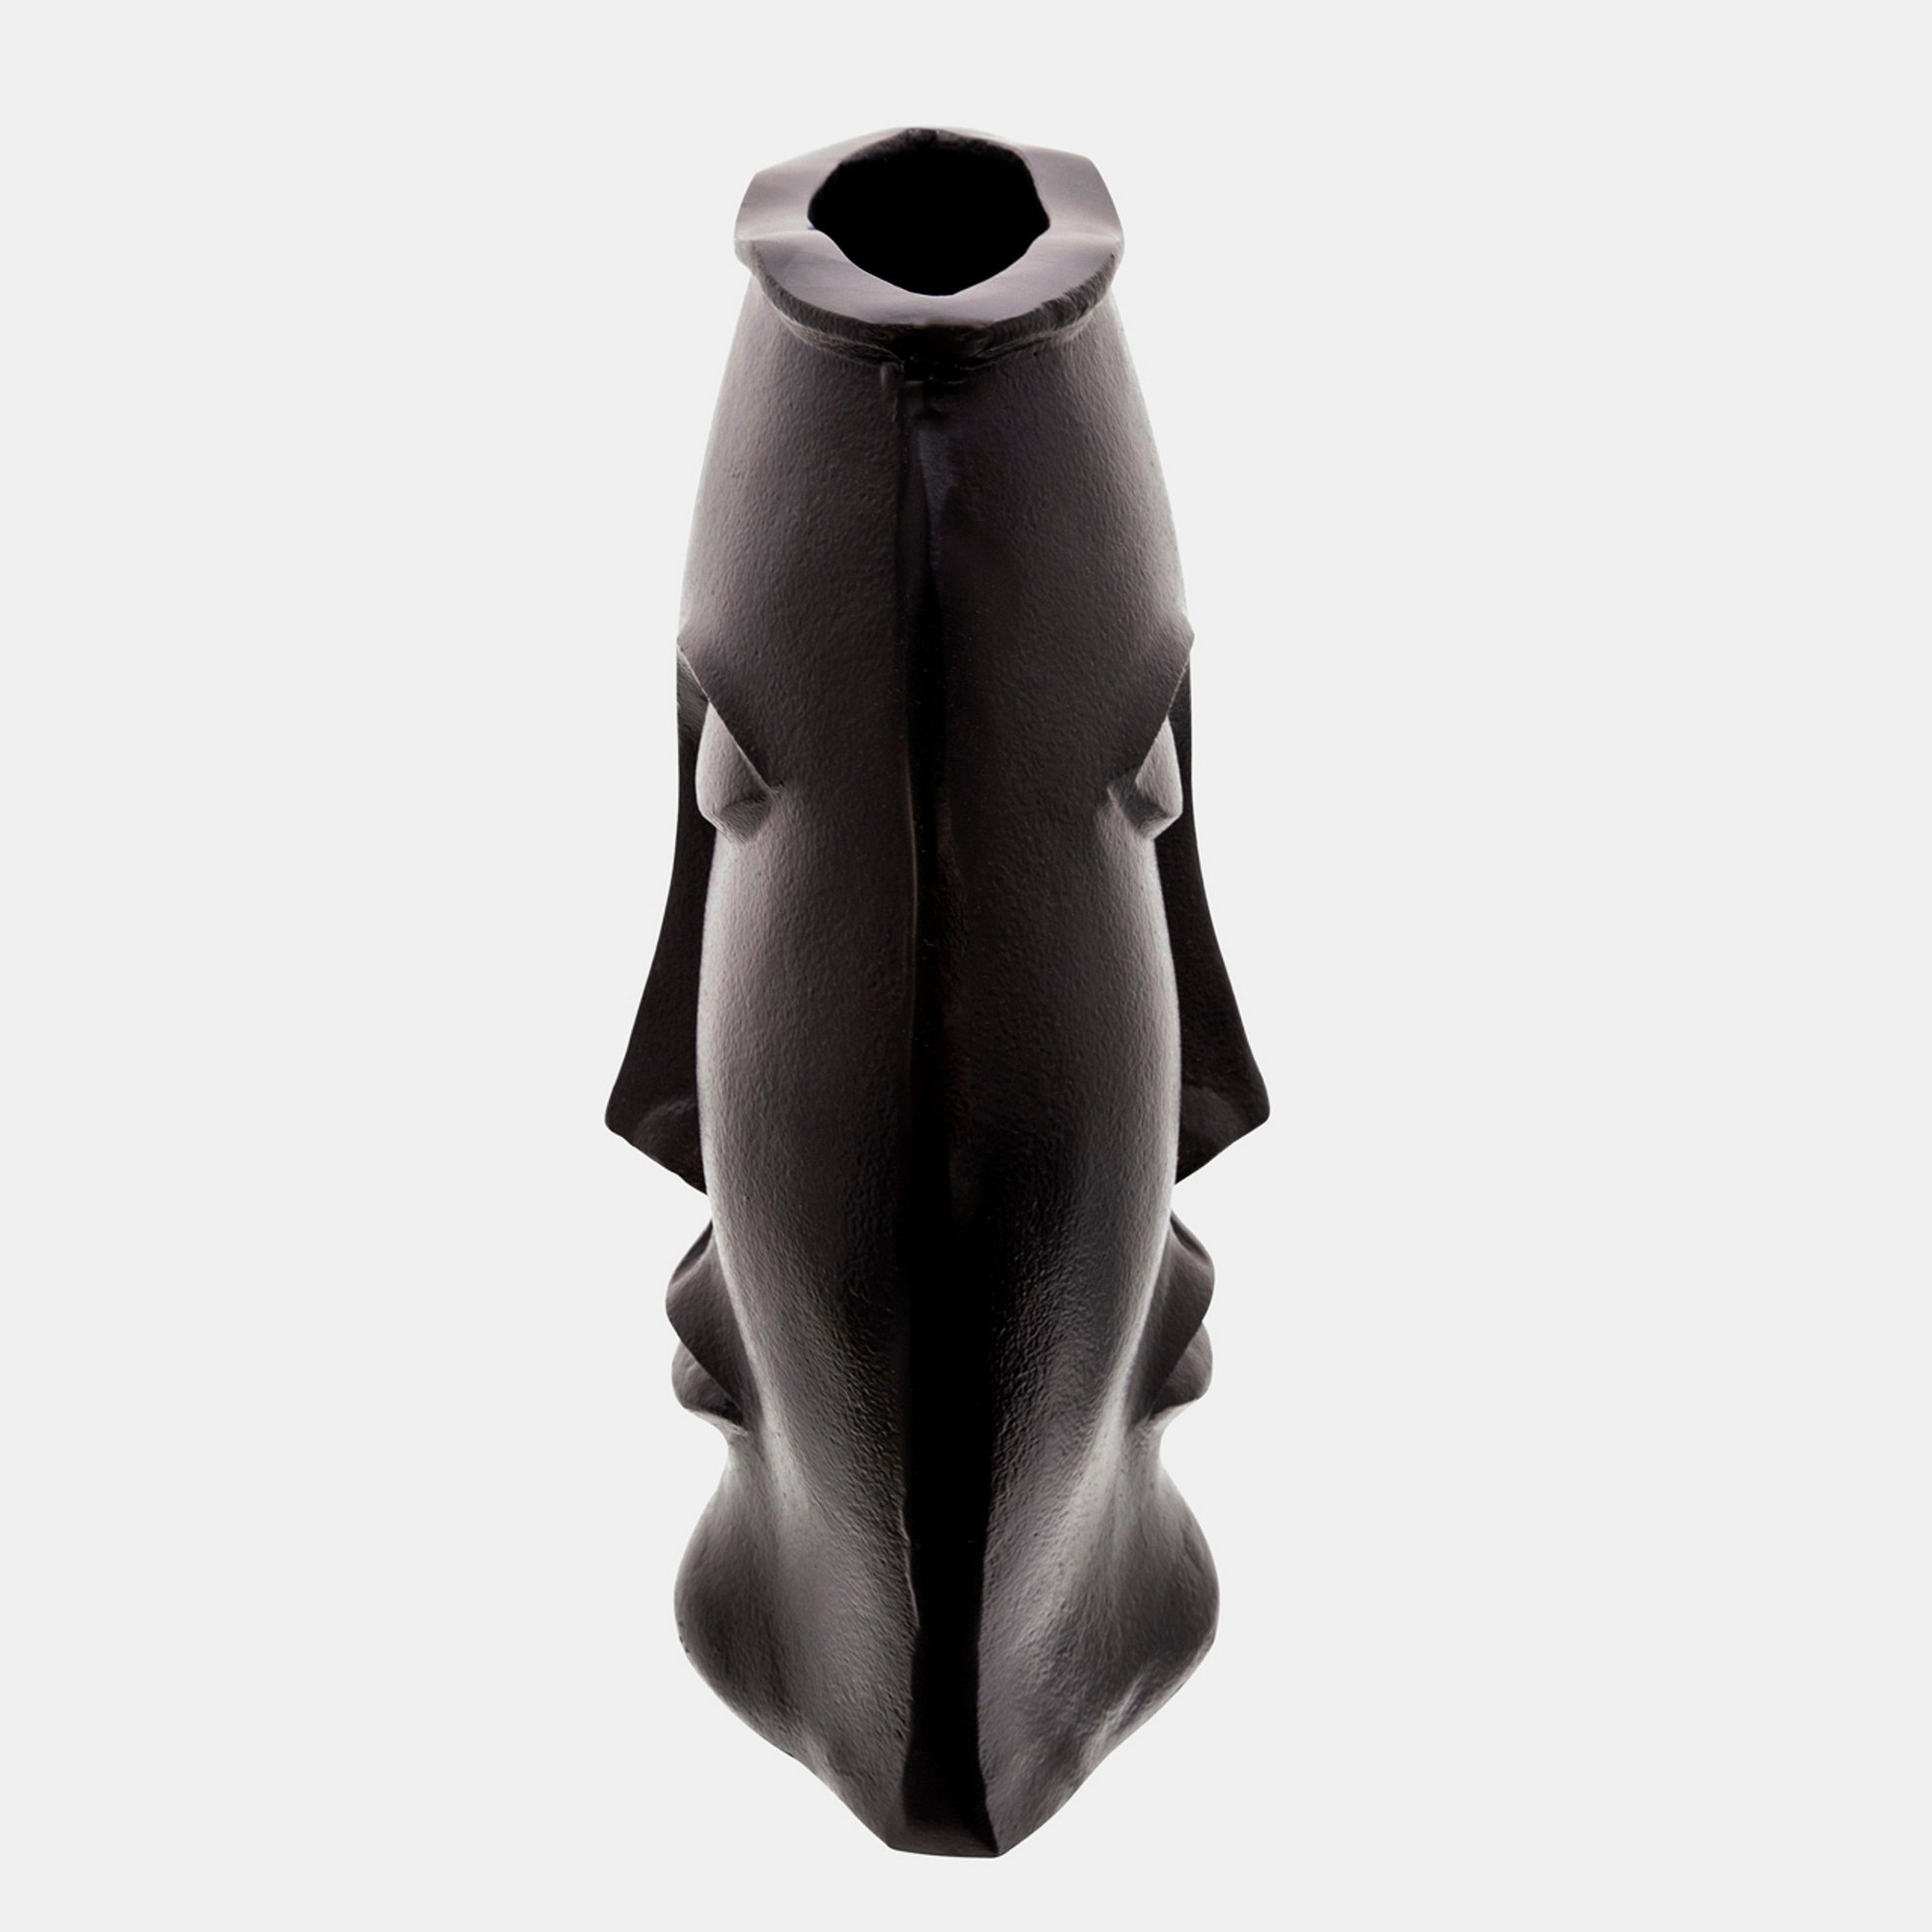 14 Inch Vase, Facial Structure, Modernistic Round Black Aluminum Frame -Saltoro Sherpi